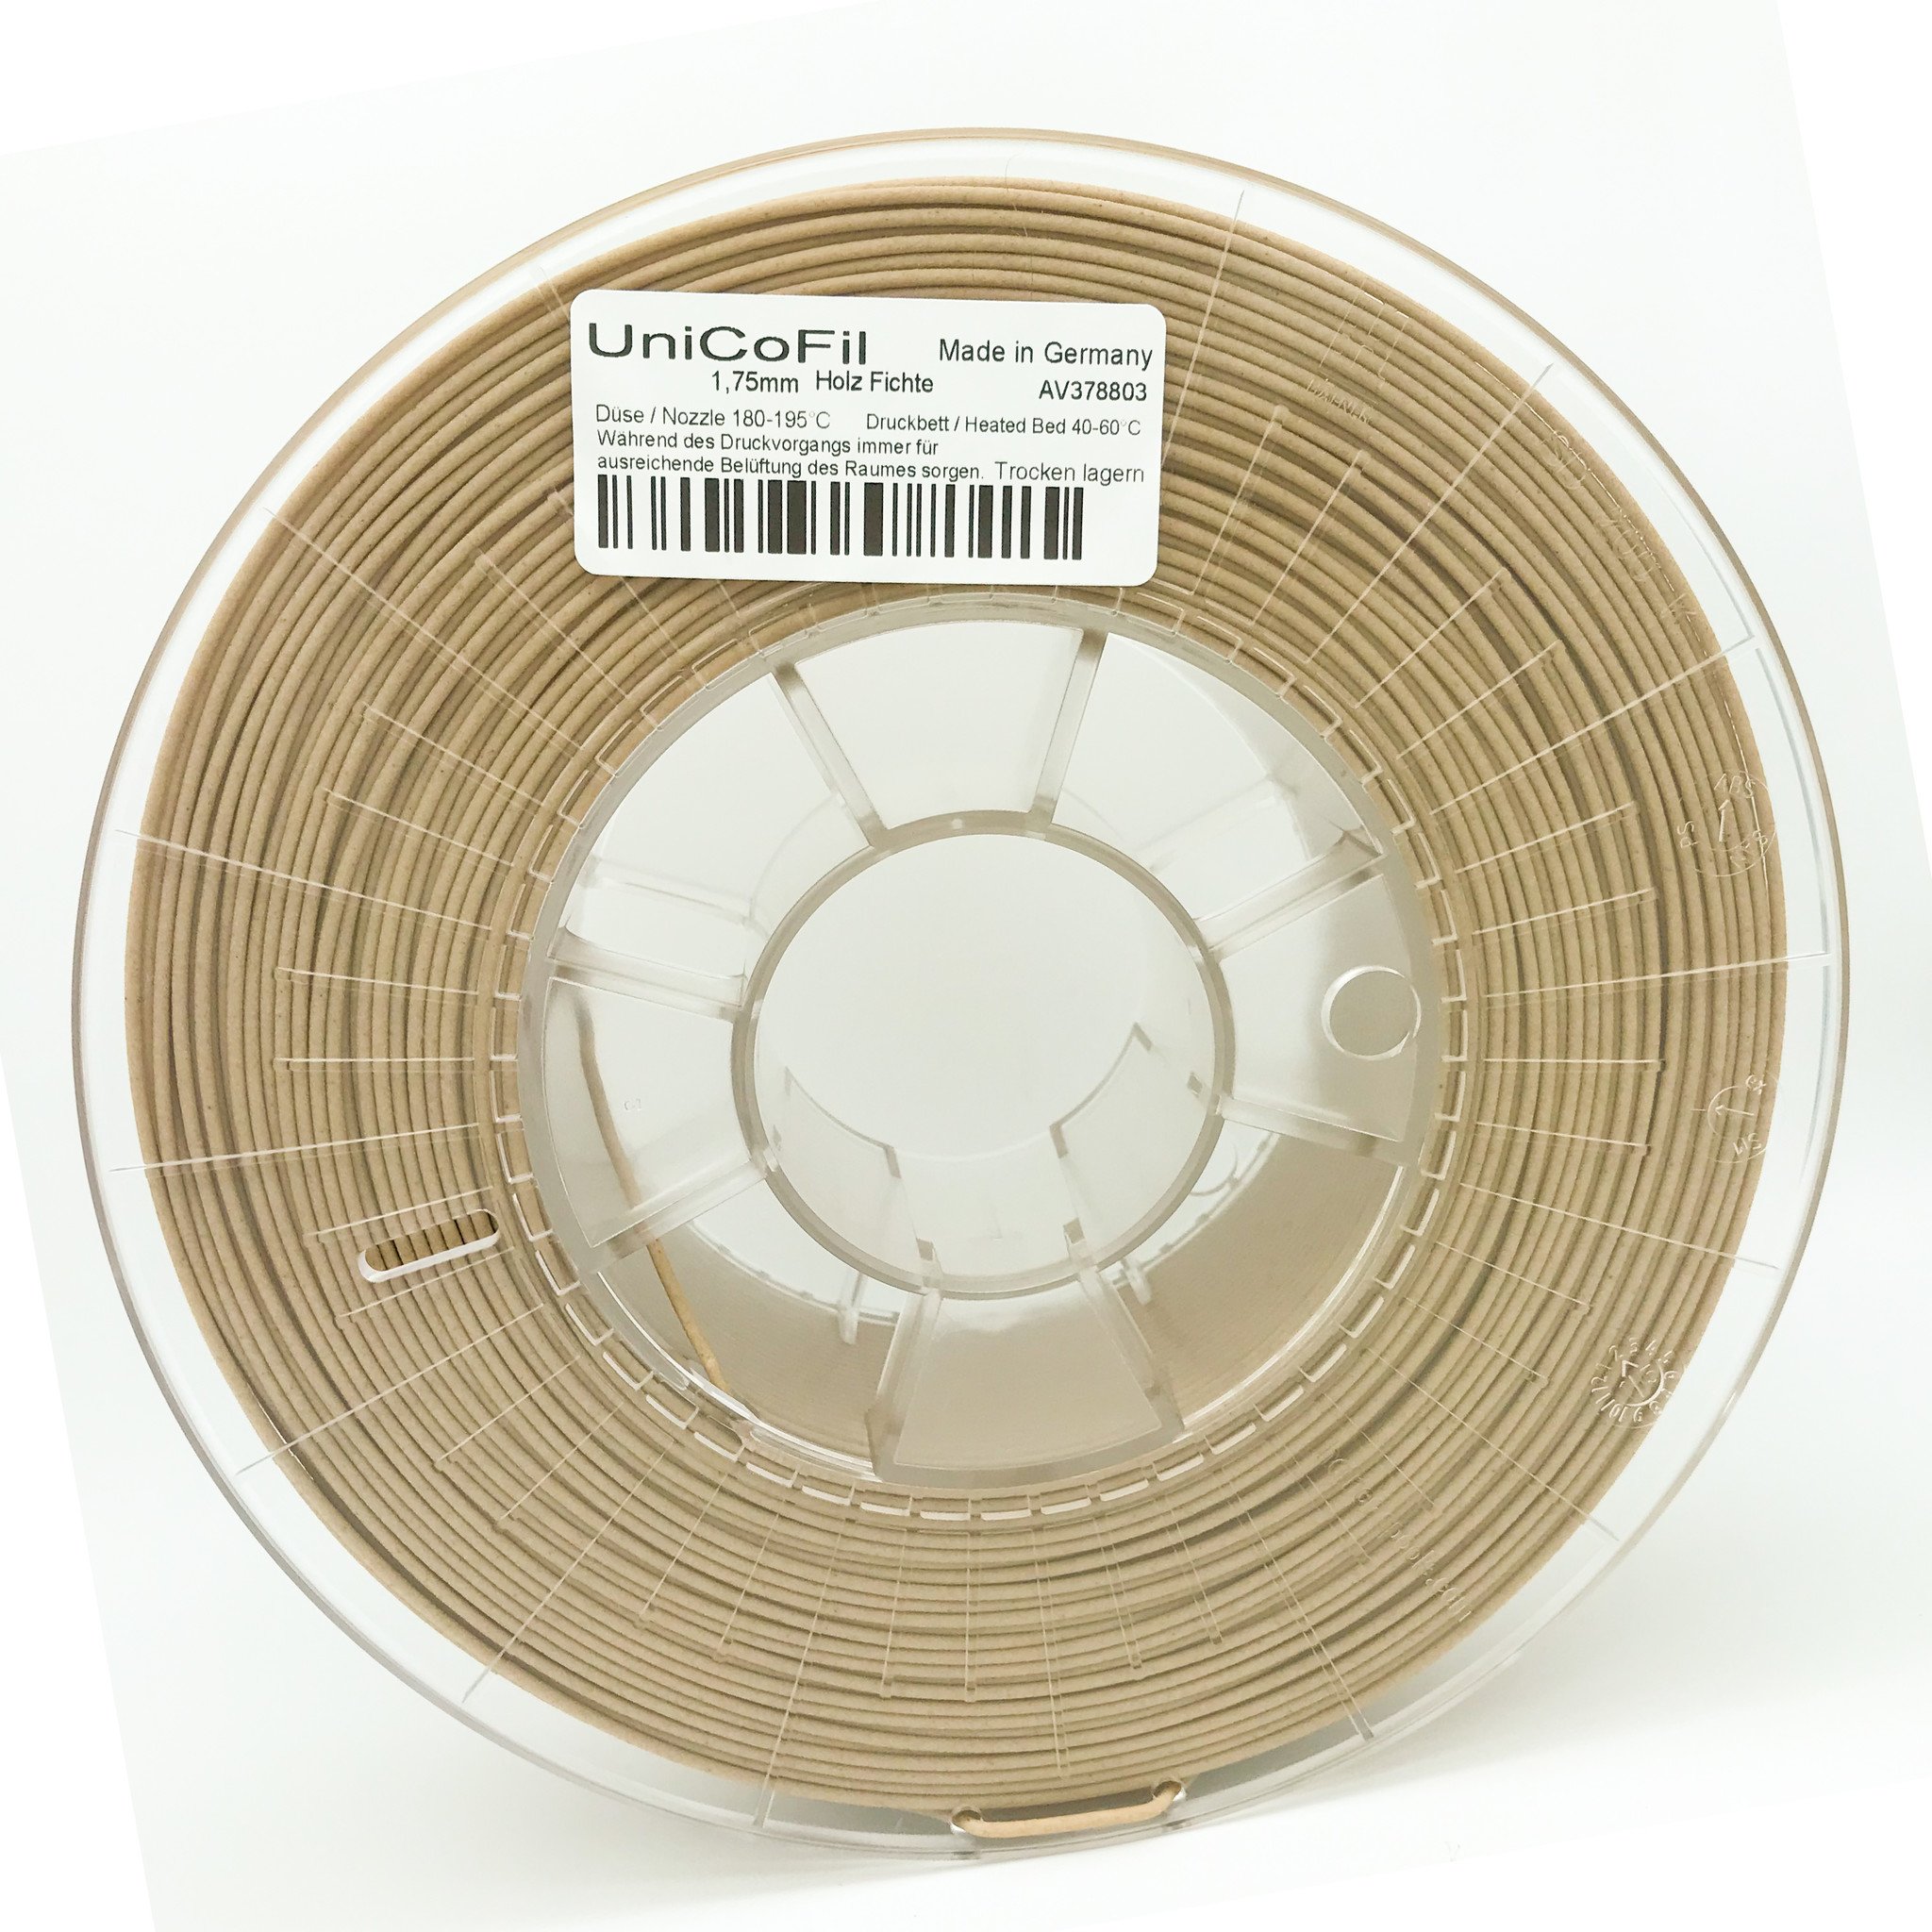 Wood PLA Filament (750g)